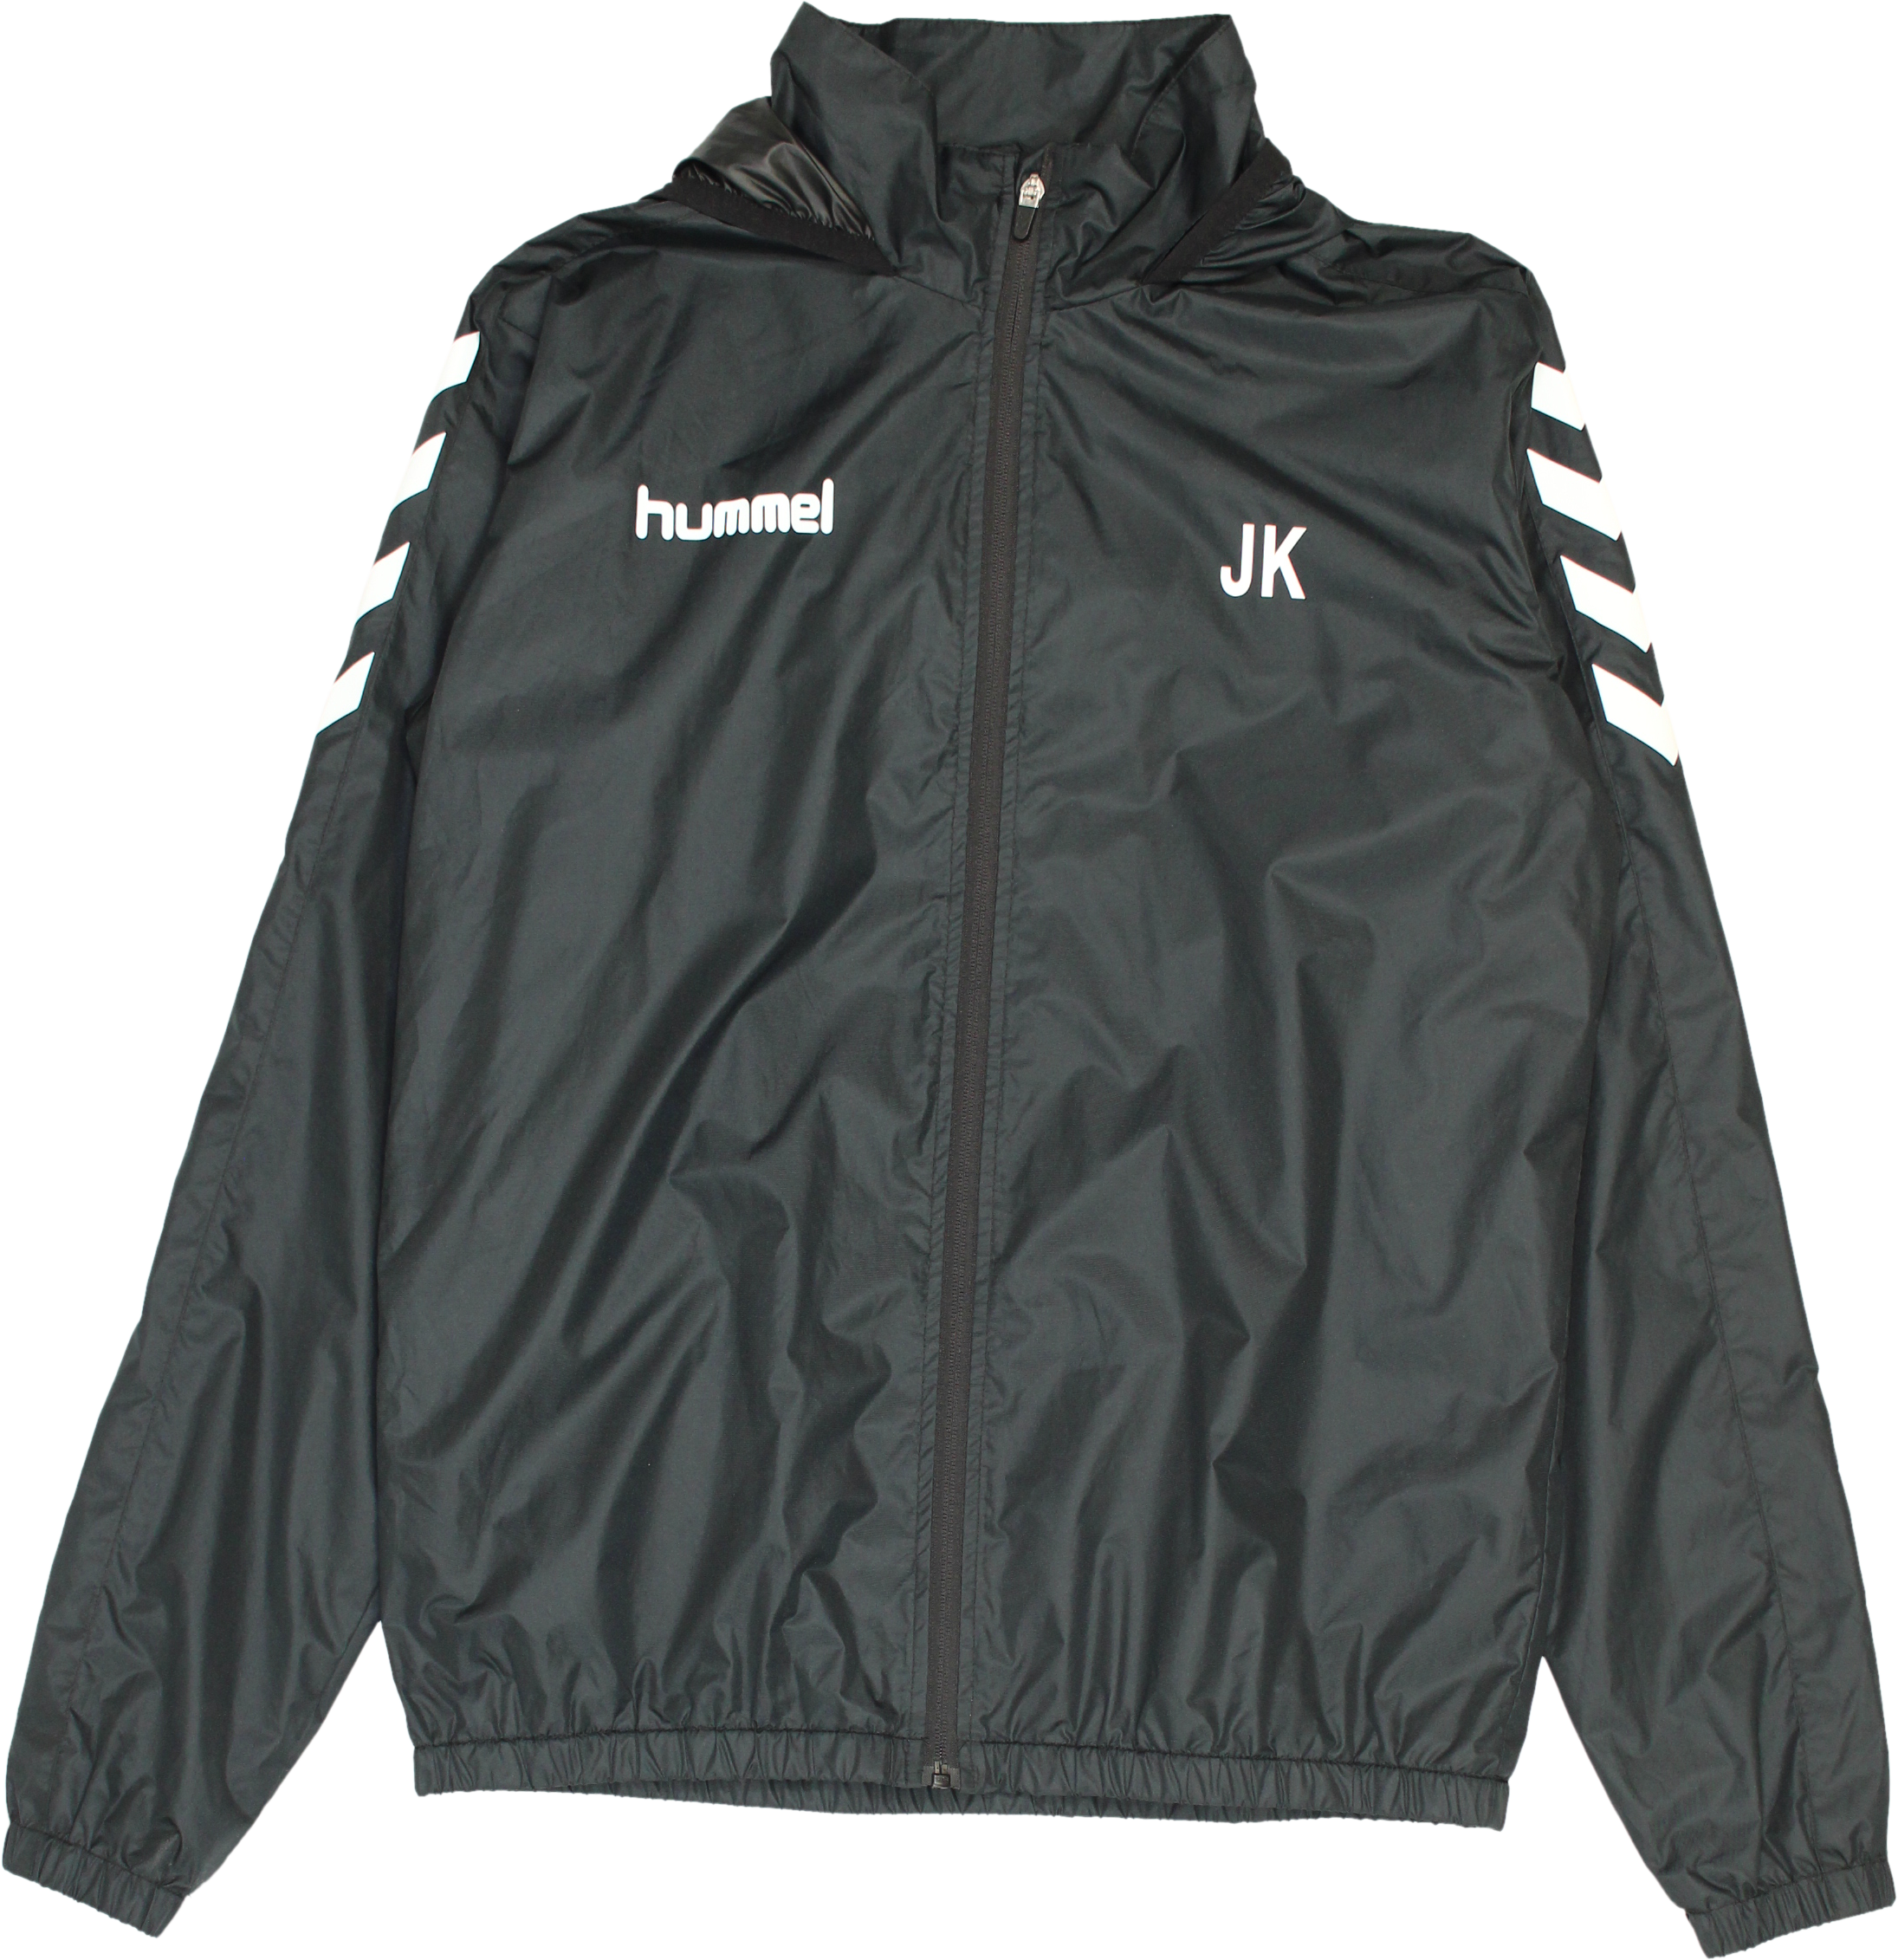 Hummel - Sports Jacket- ThriftTale.com - Vintage and second handclothing